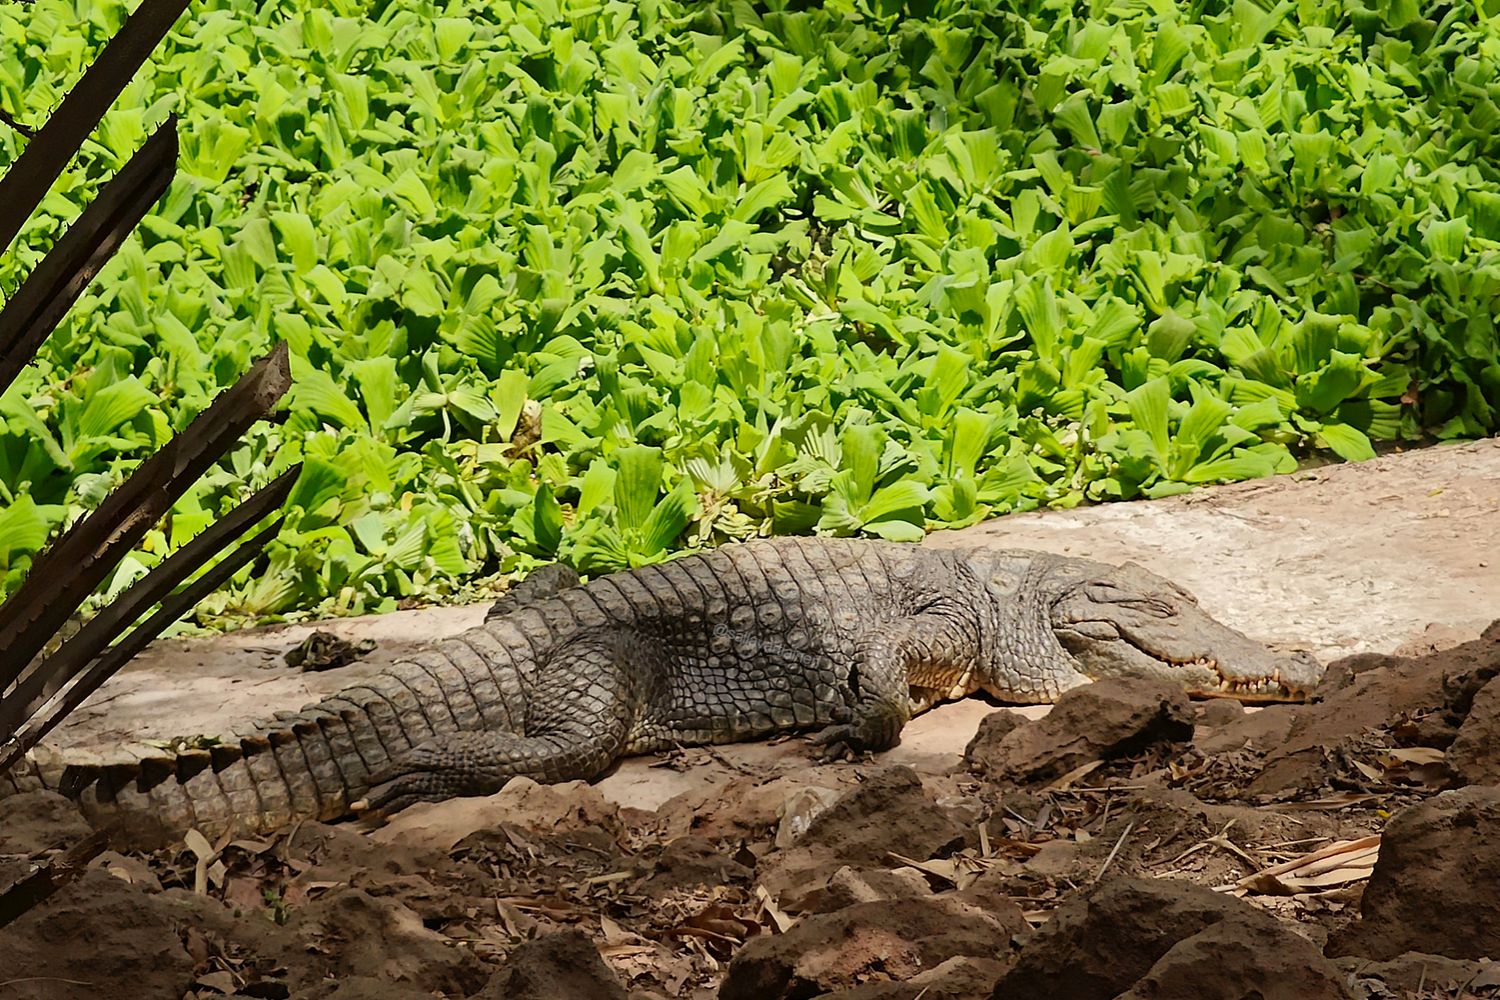 kachikally crocodiles in the gambia